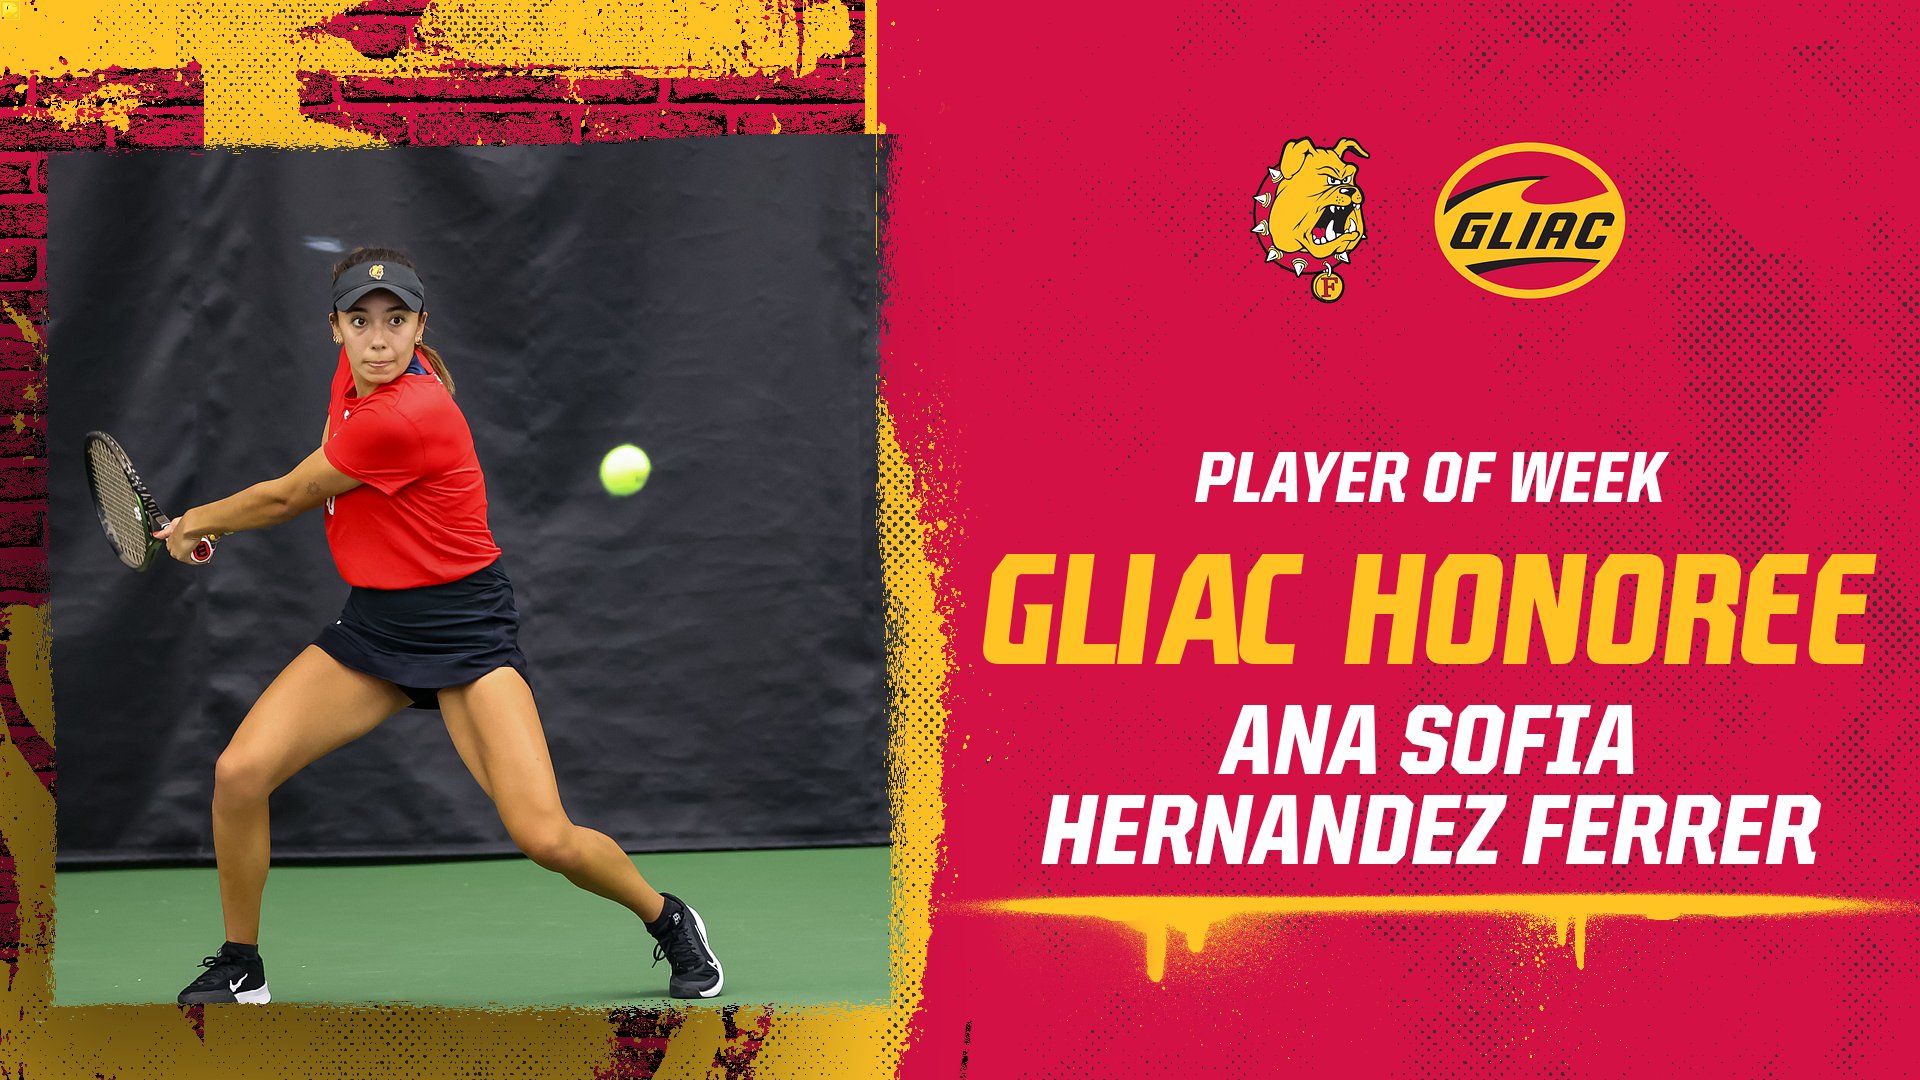 FSU's Ana Sofia Hernandez Ferrer Tabbed As GLIAC Tennis Player Of The Week